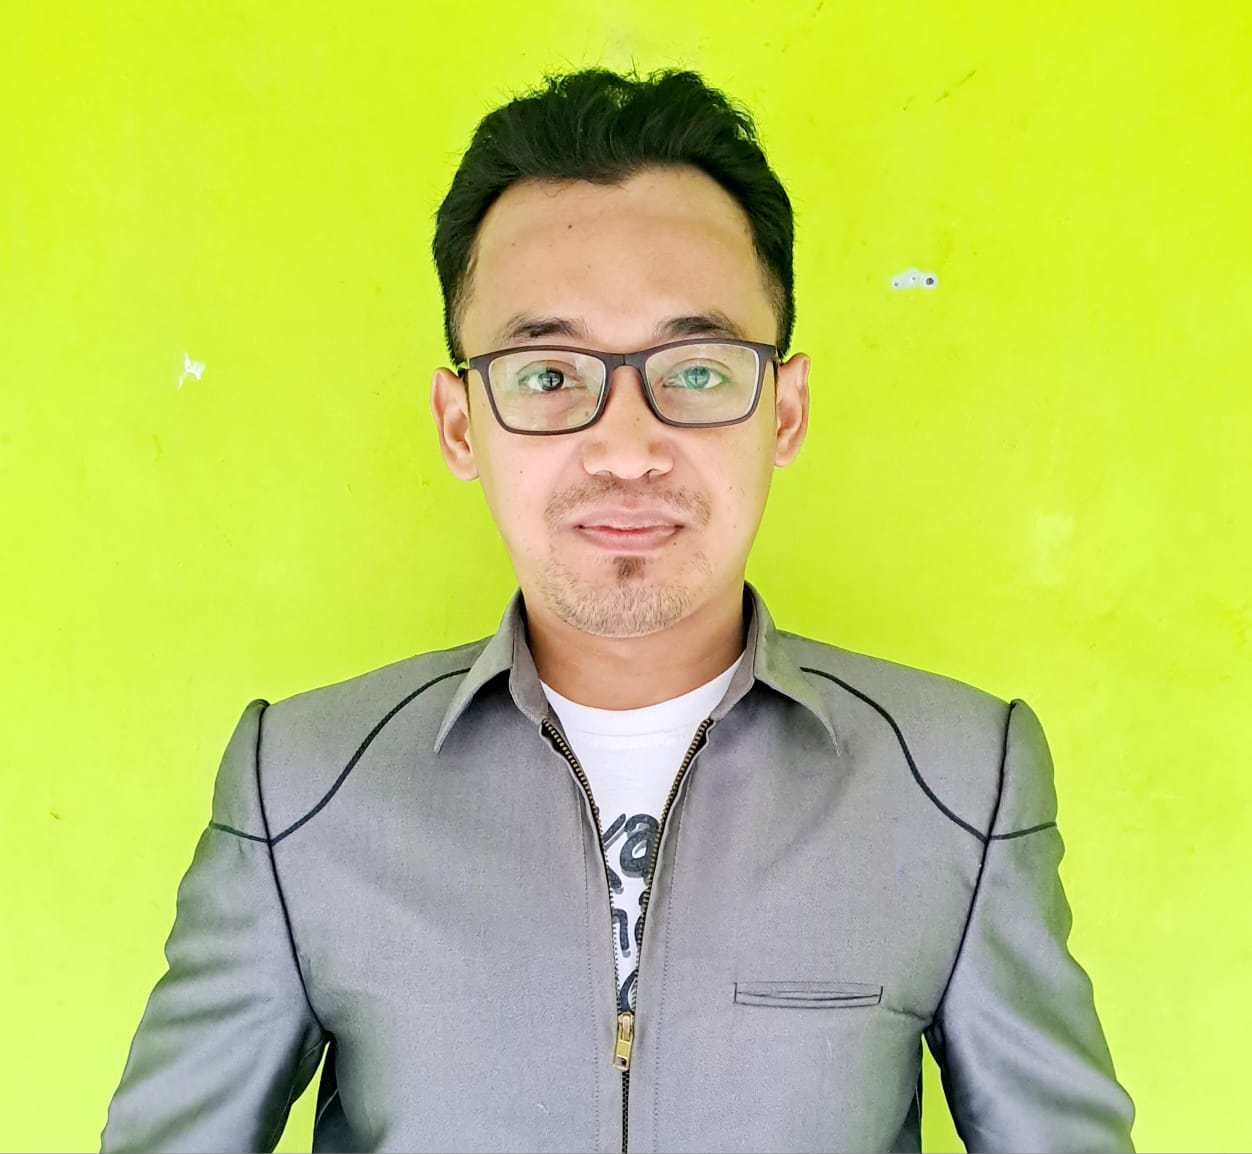 Guru BK SMK Ma'arif Lampung Kantongi Predikat Jurnalis Indonesia dari Lembaga AR Learning Center. (SUARA UTAMA)